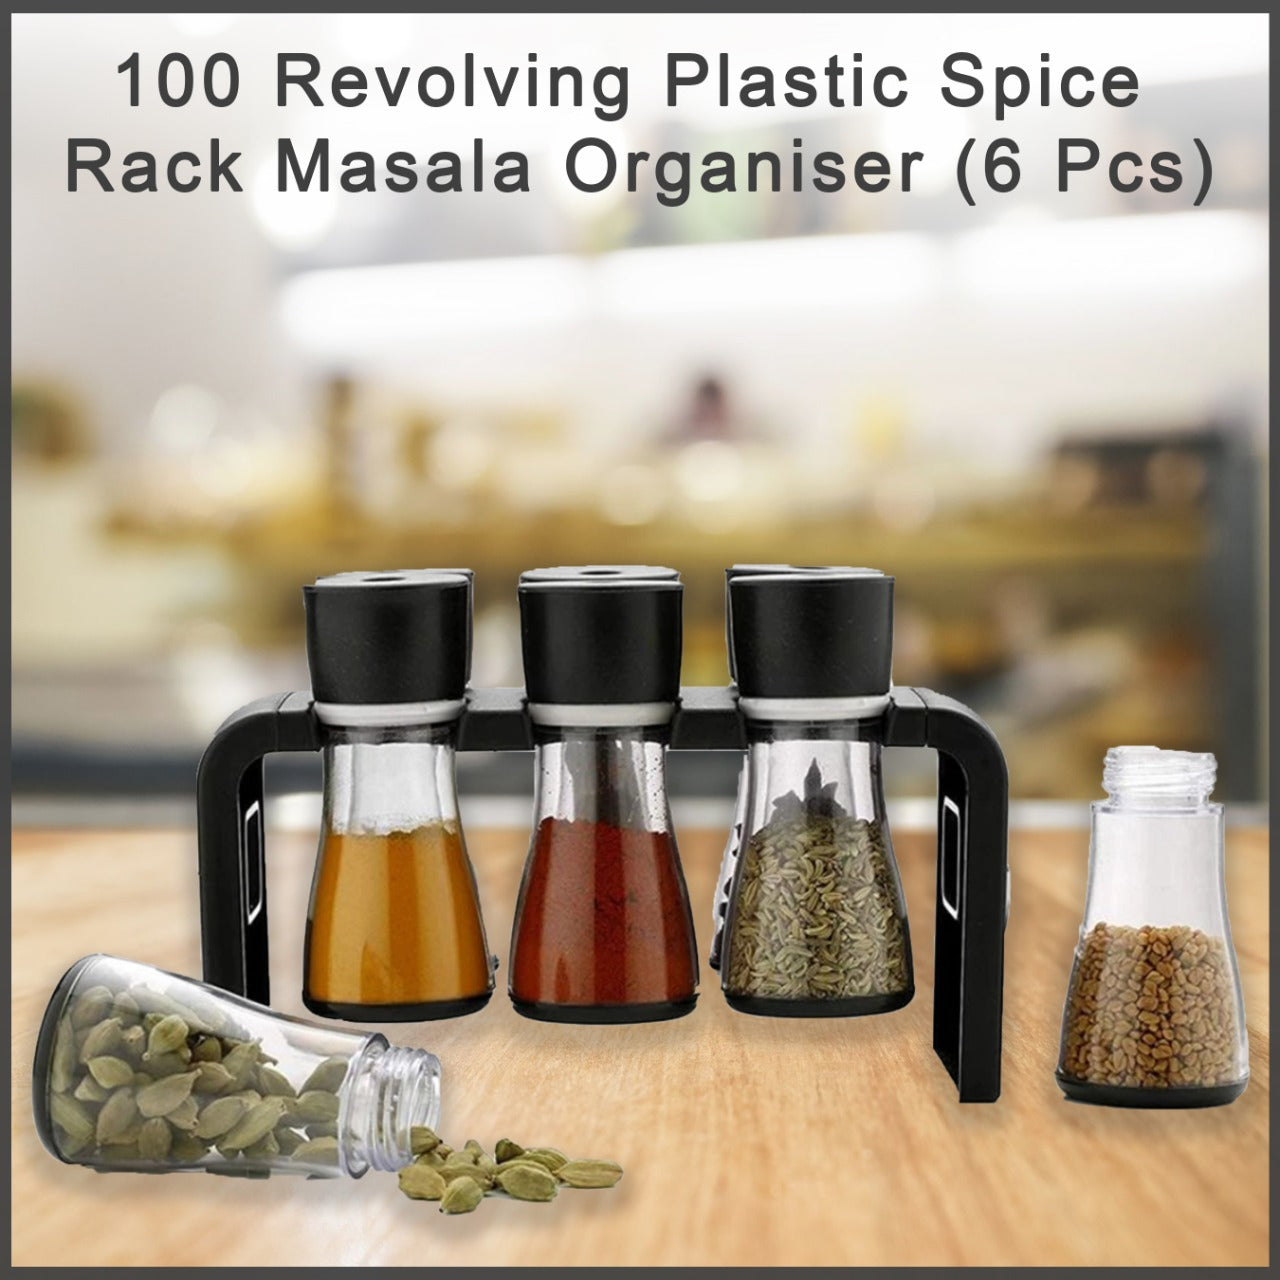 100 Revolving Plastic Spice Rack Masala Organiser (6 Pcs) Dukandaily